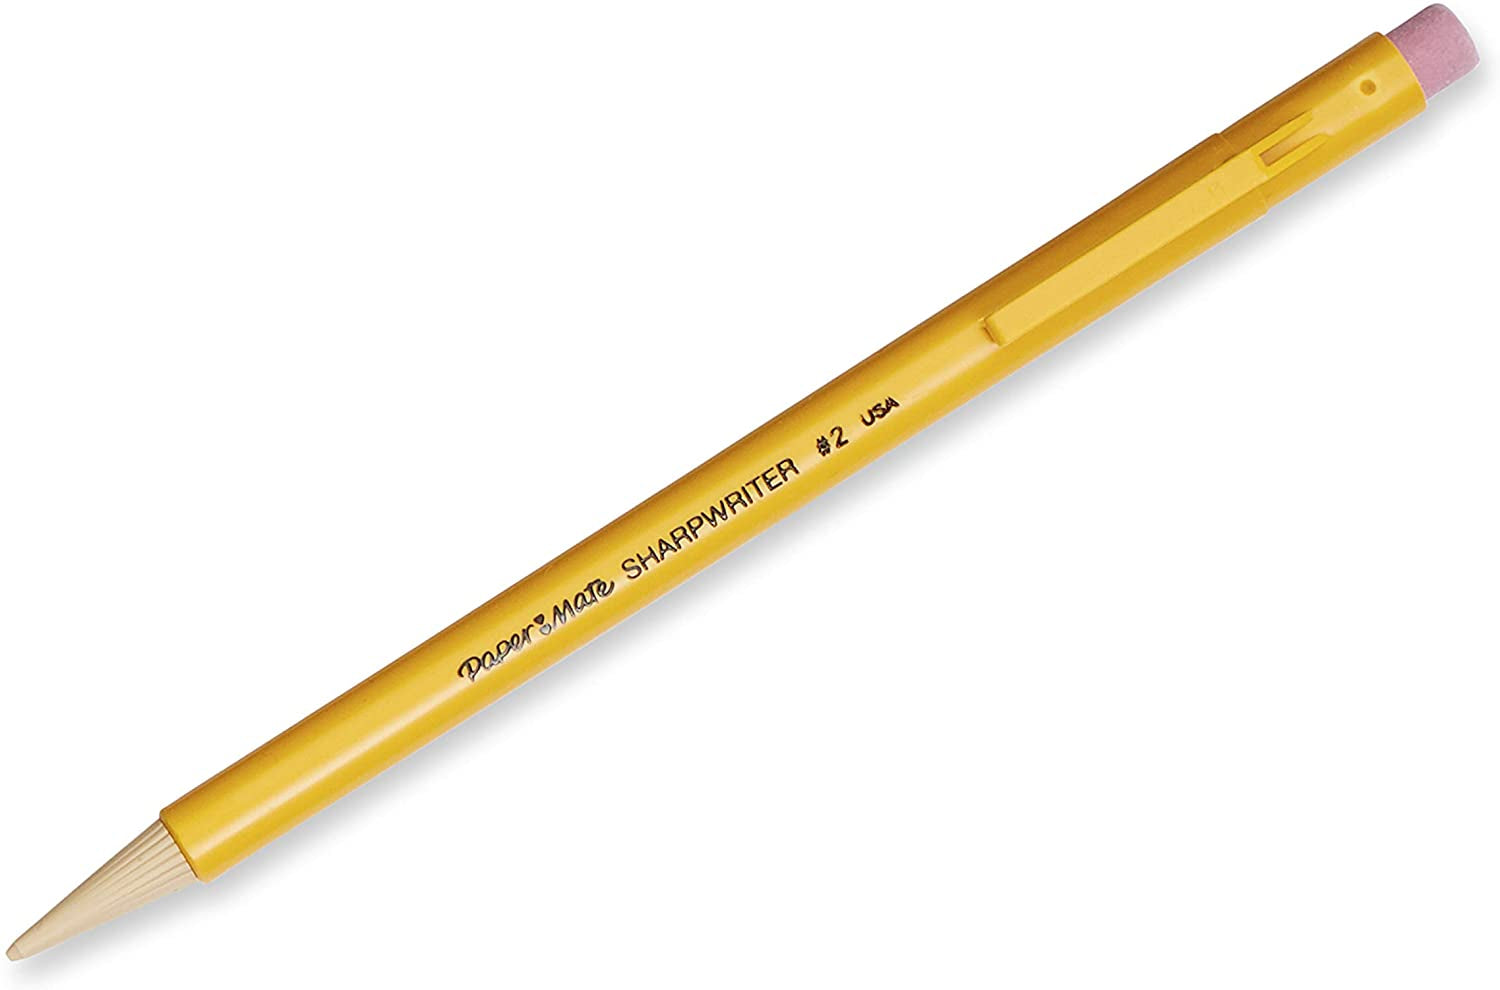 Sharpwriter Mechanical Pencils 0.7 Mm 2 Pencil Pencils for School Supplies, Yellow, 36 Count